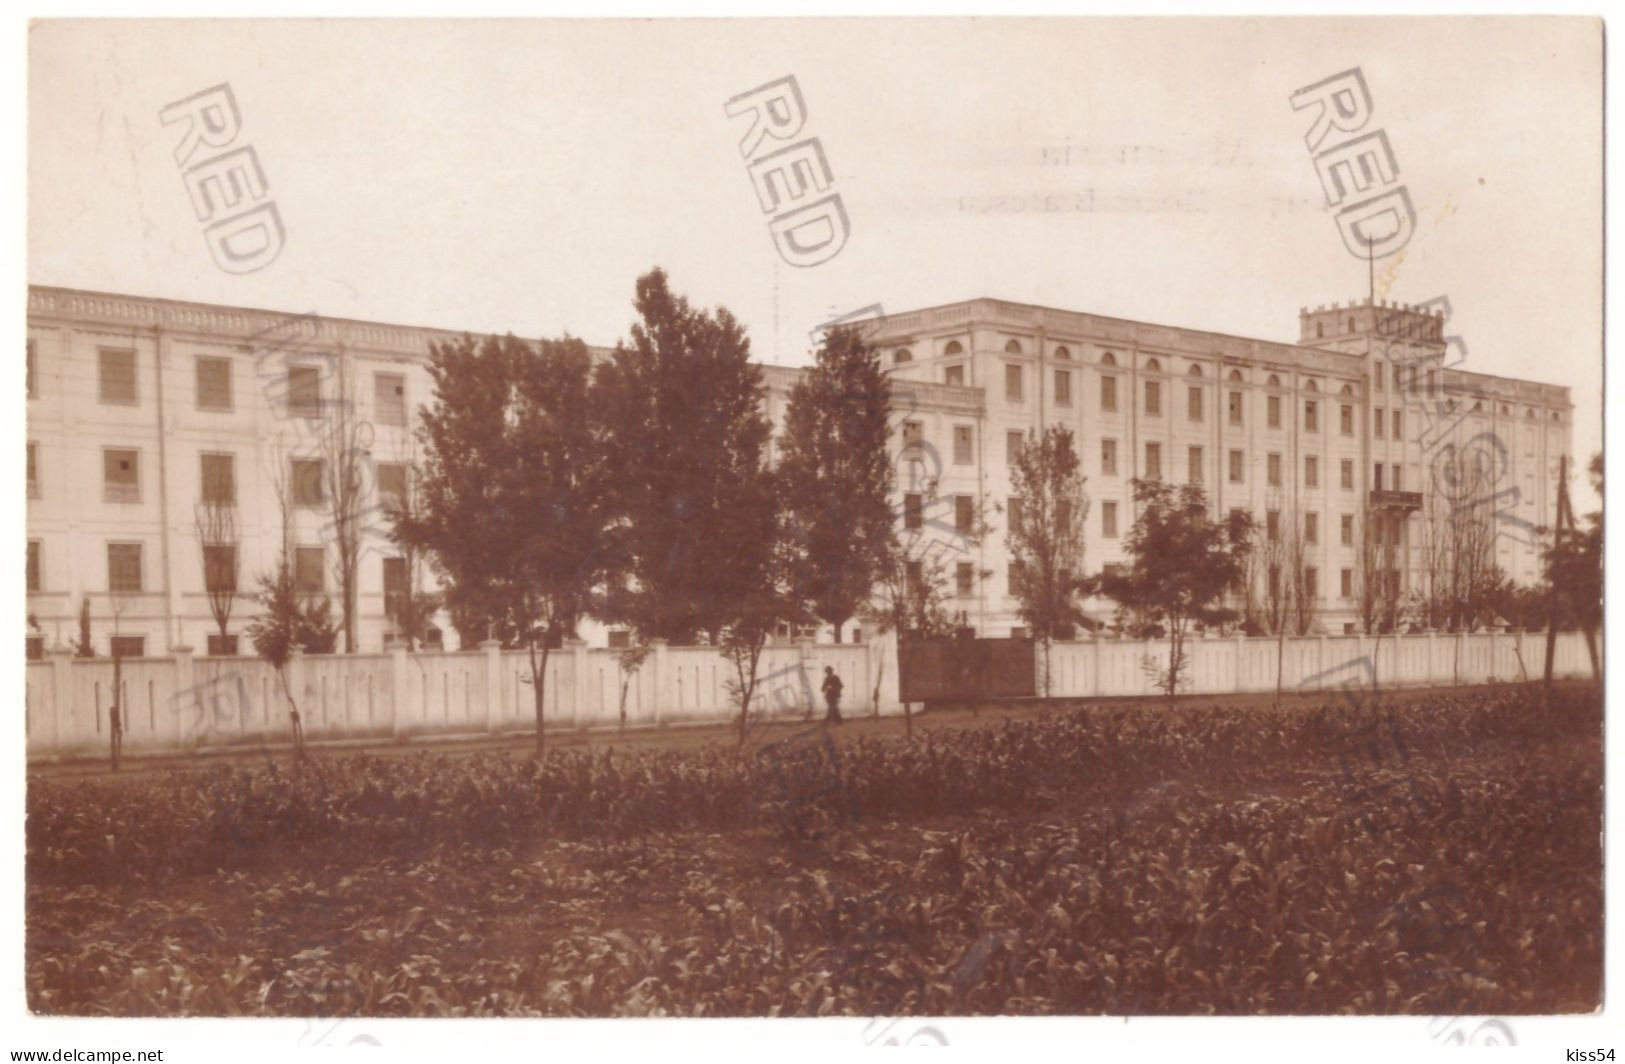 RO 47 - 25265 ALEXANDRIA, Teleorman, Bratescu Mill, Romania - Old Postcard - Used - Rumänien